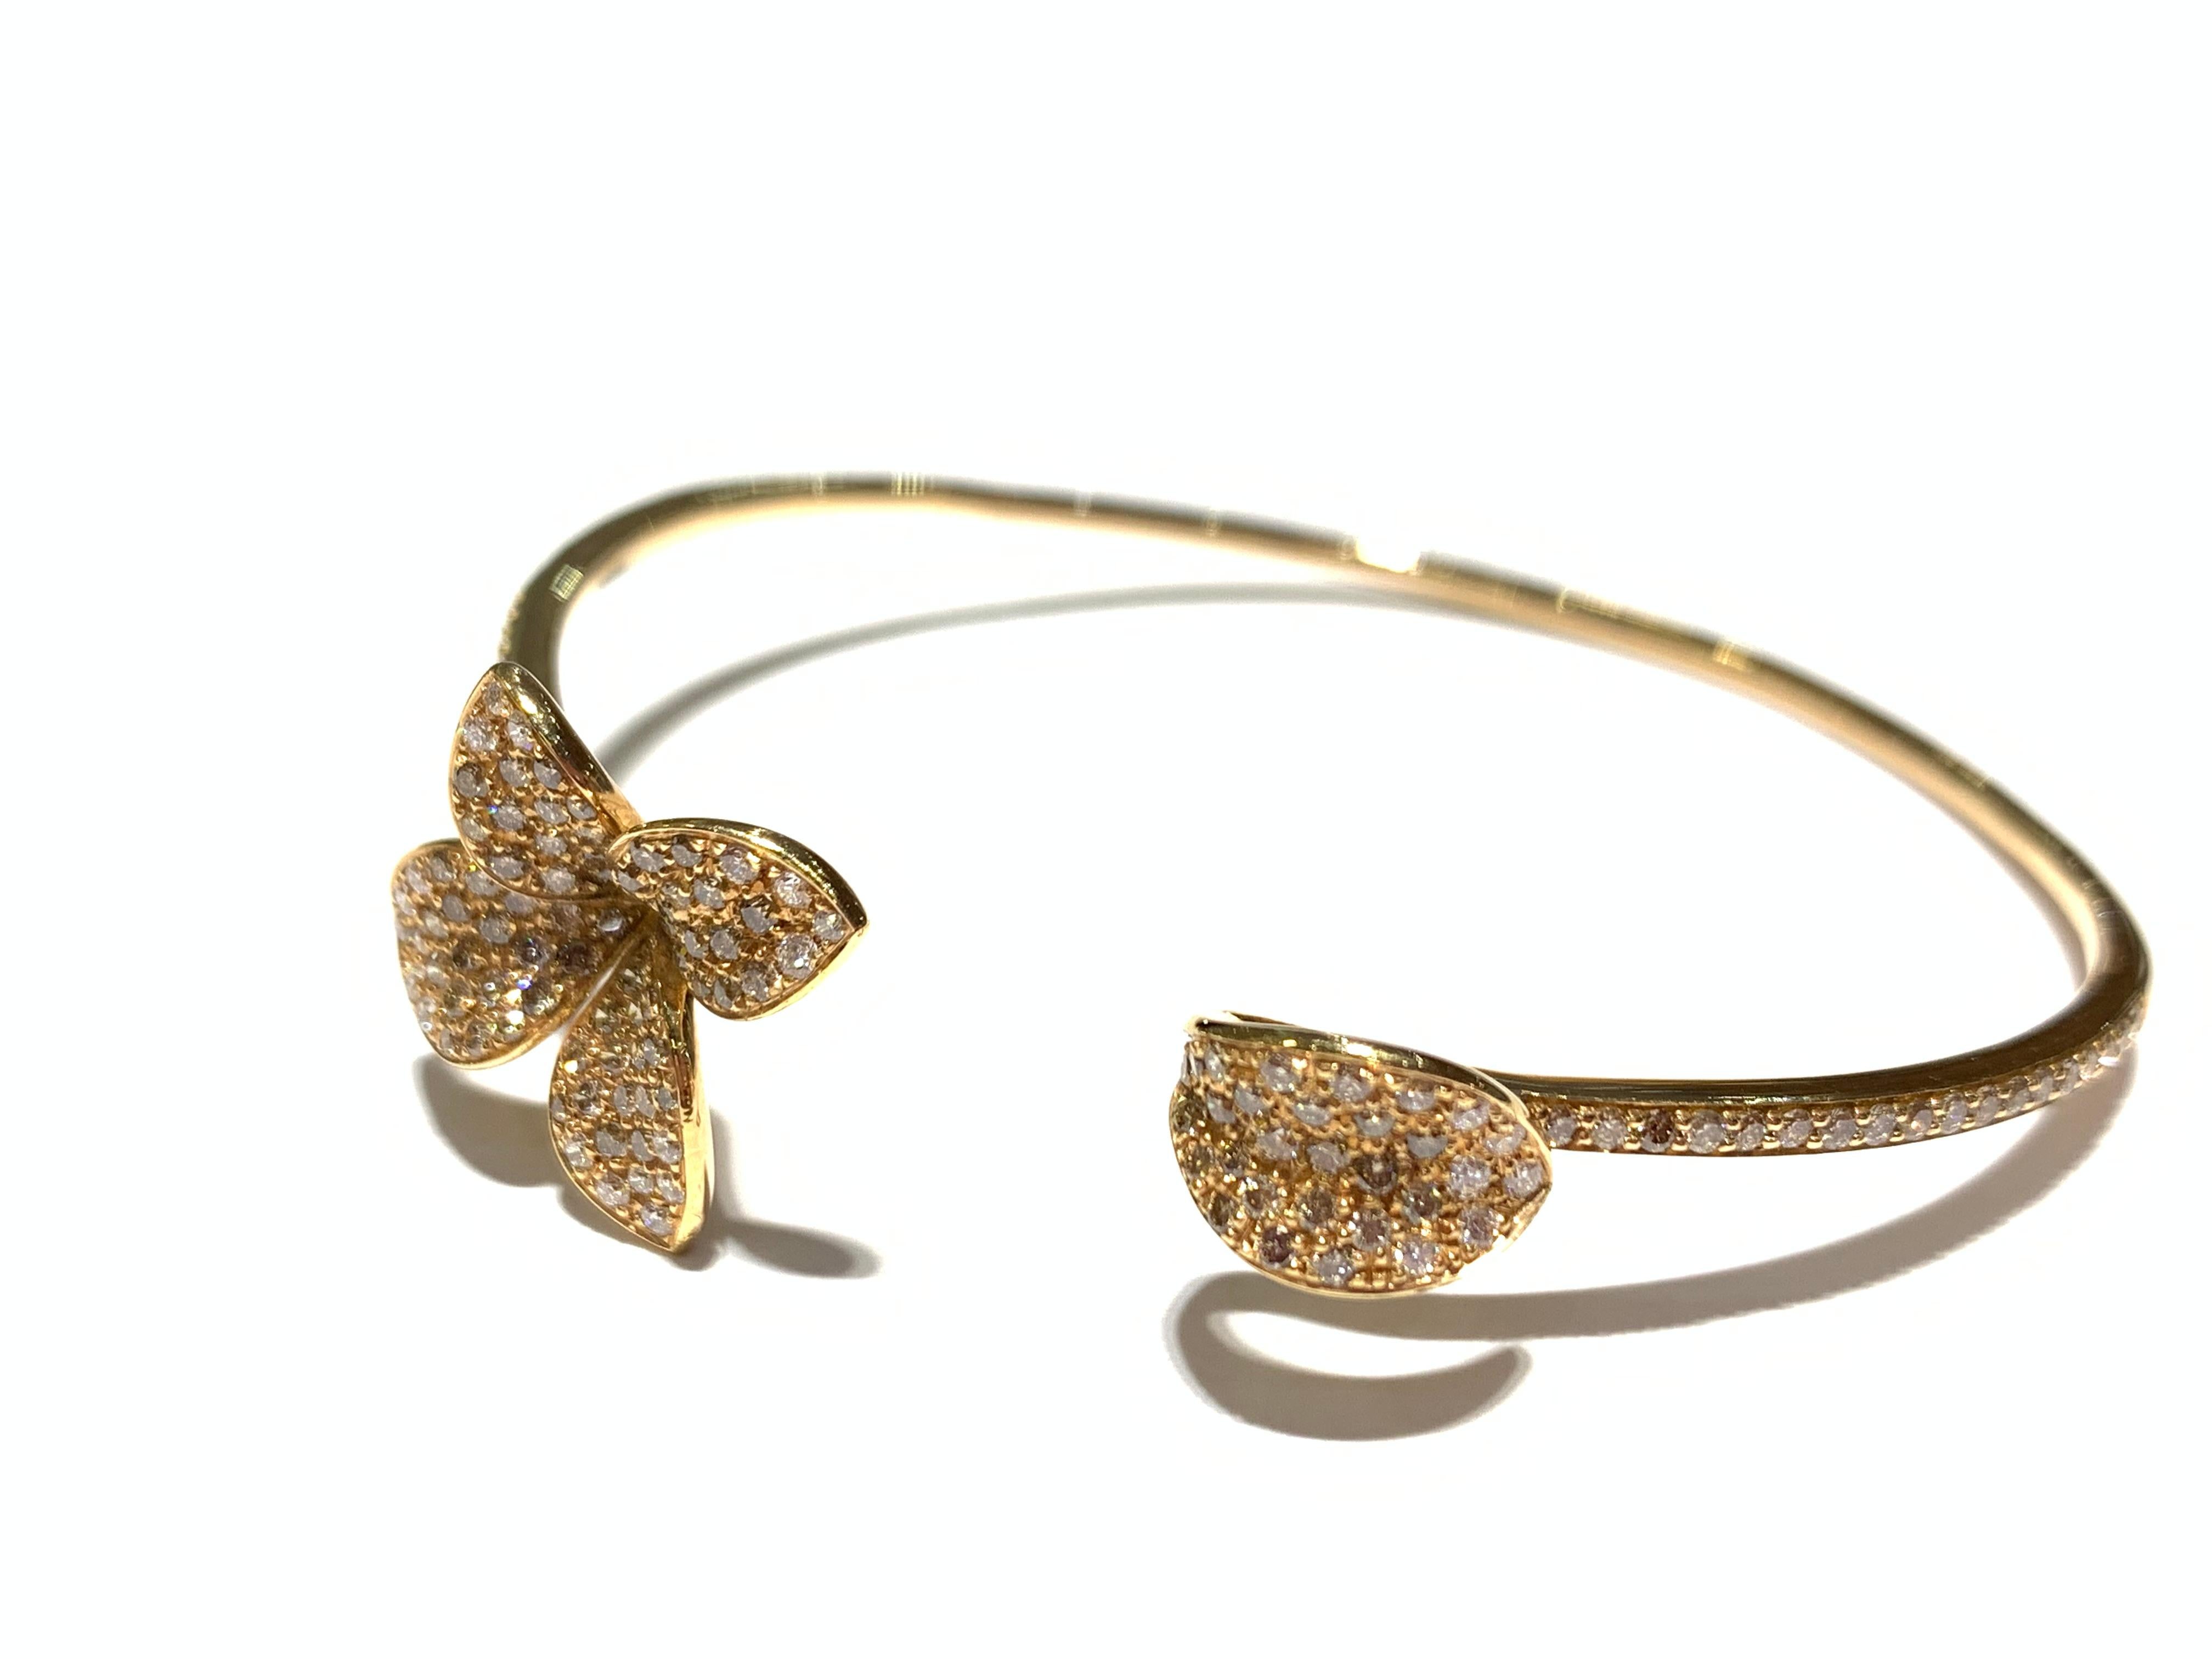 Pasquale Bruni Giardini Segreti petite bangle with 1.25 carat diamonds 
set in 18 karate rose gold 
Italian made 
